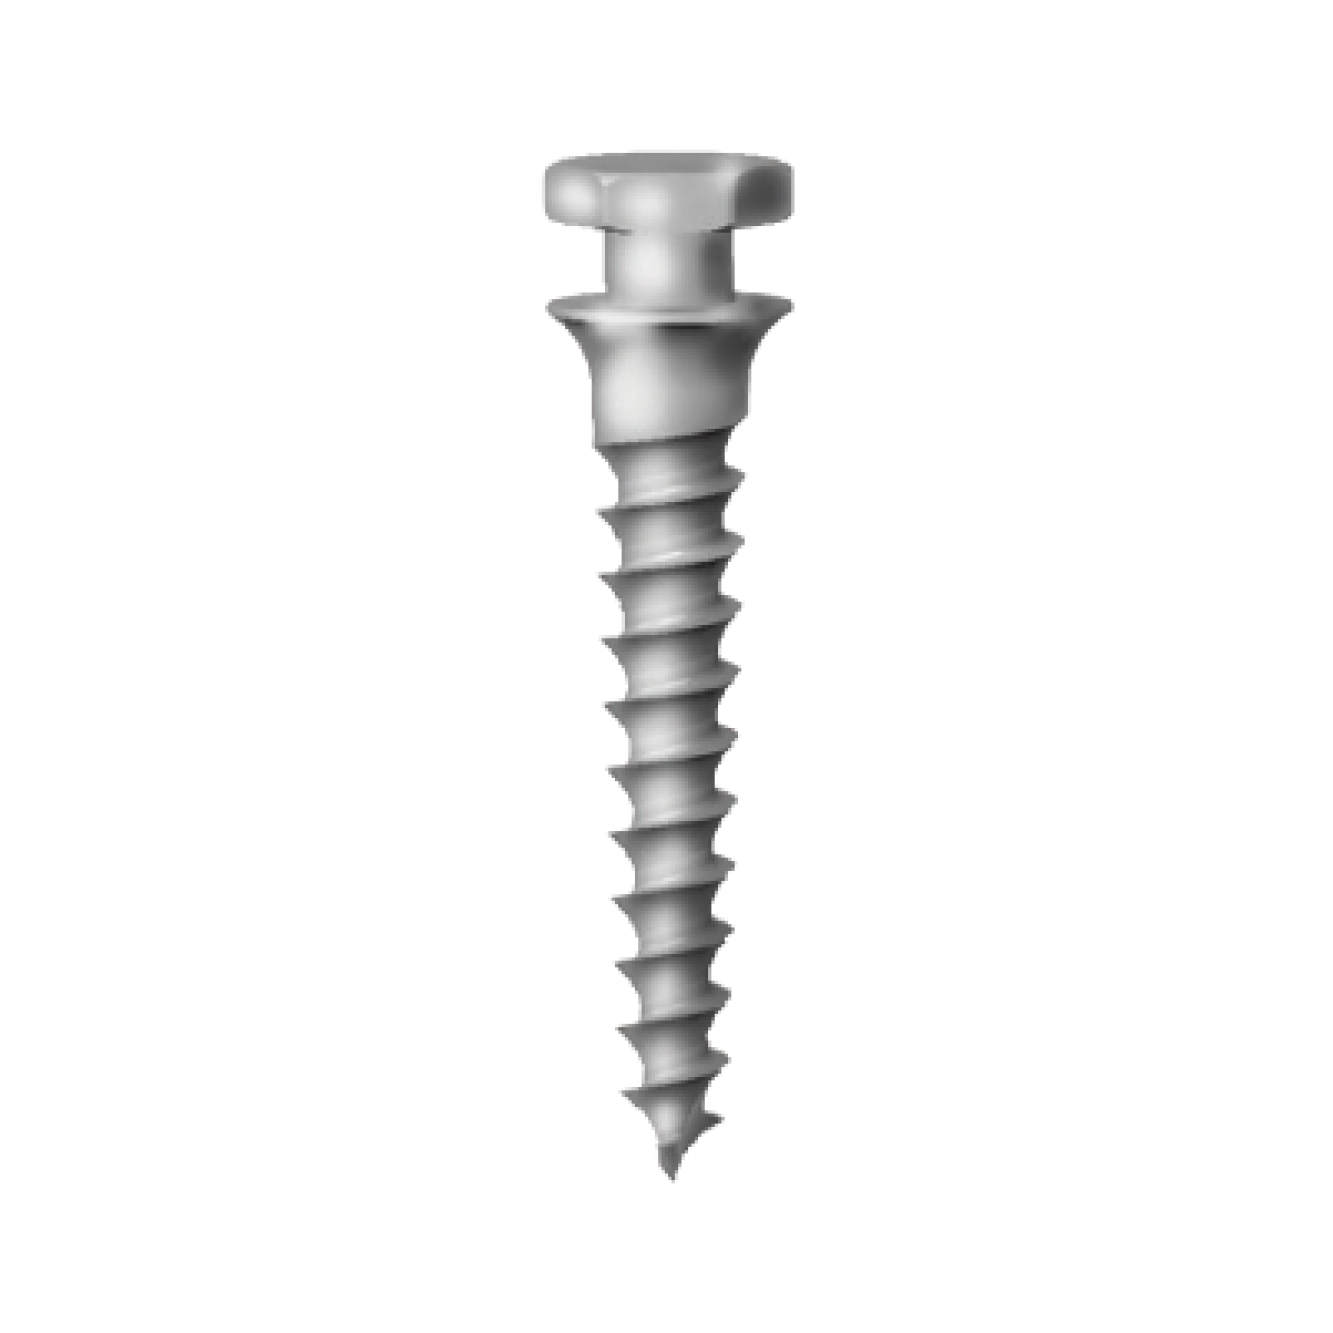 SA-L-14-006 Стоматологический ортодонтический винт для эластичной тяги и проволоки, диаметр 1.4 мм, длина 6 мм, Mr.Curette Tech, Южная Корея